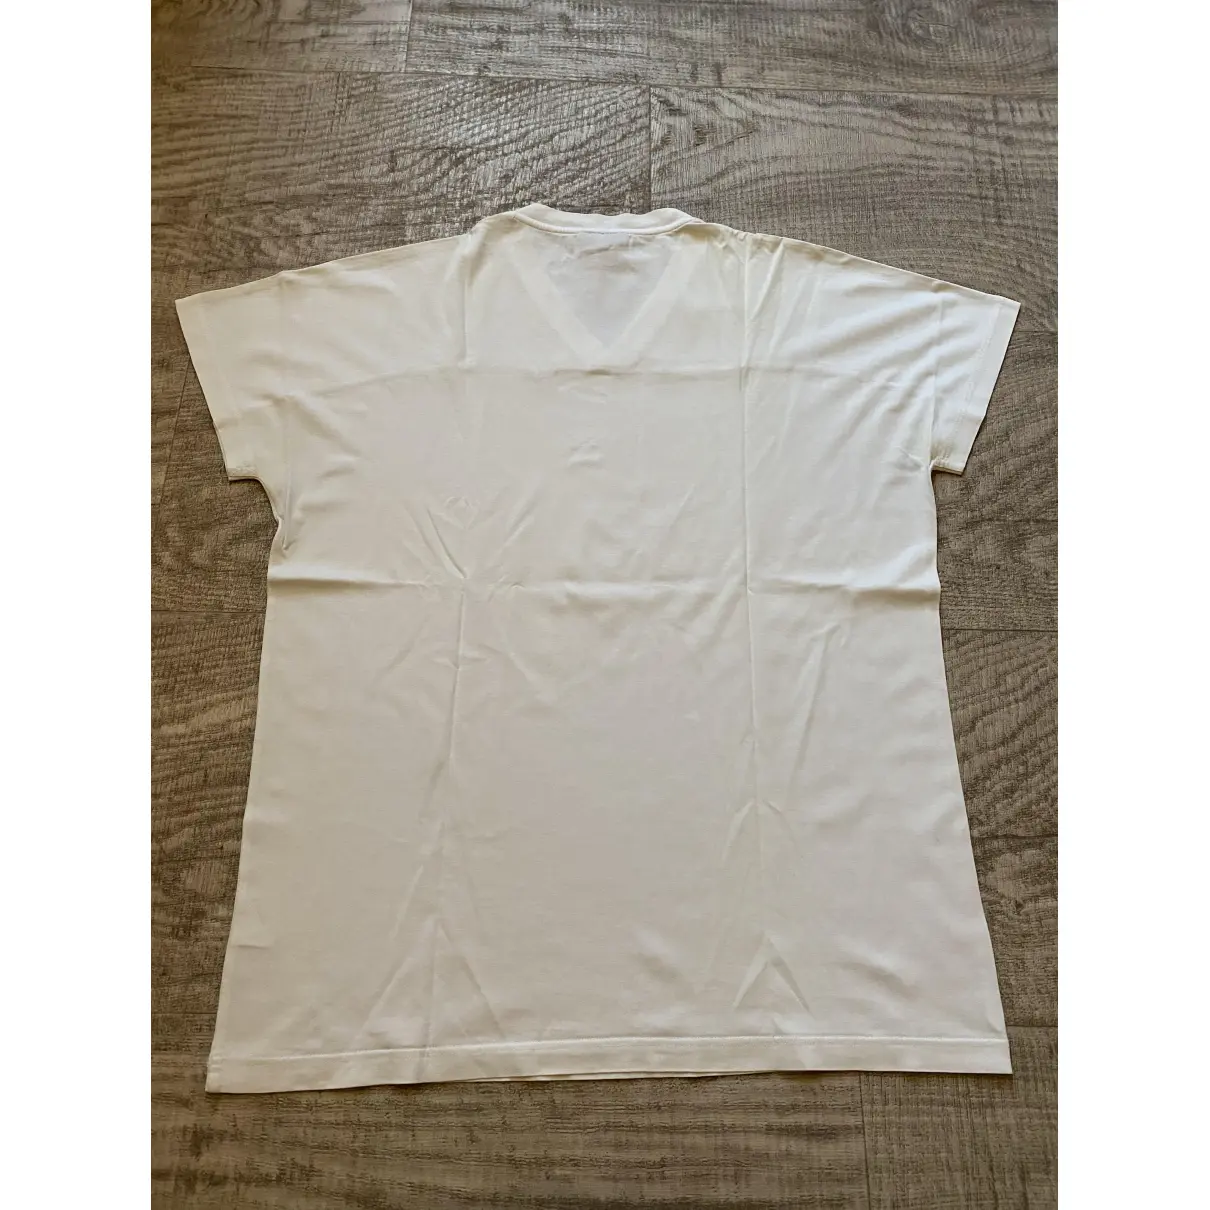 Buy Lanvin White Cotton T-shirt online